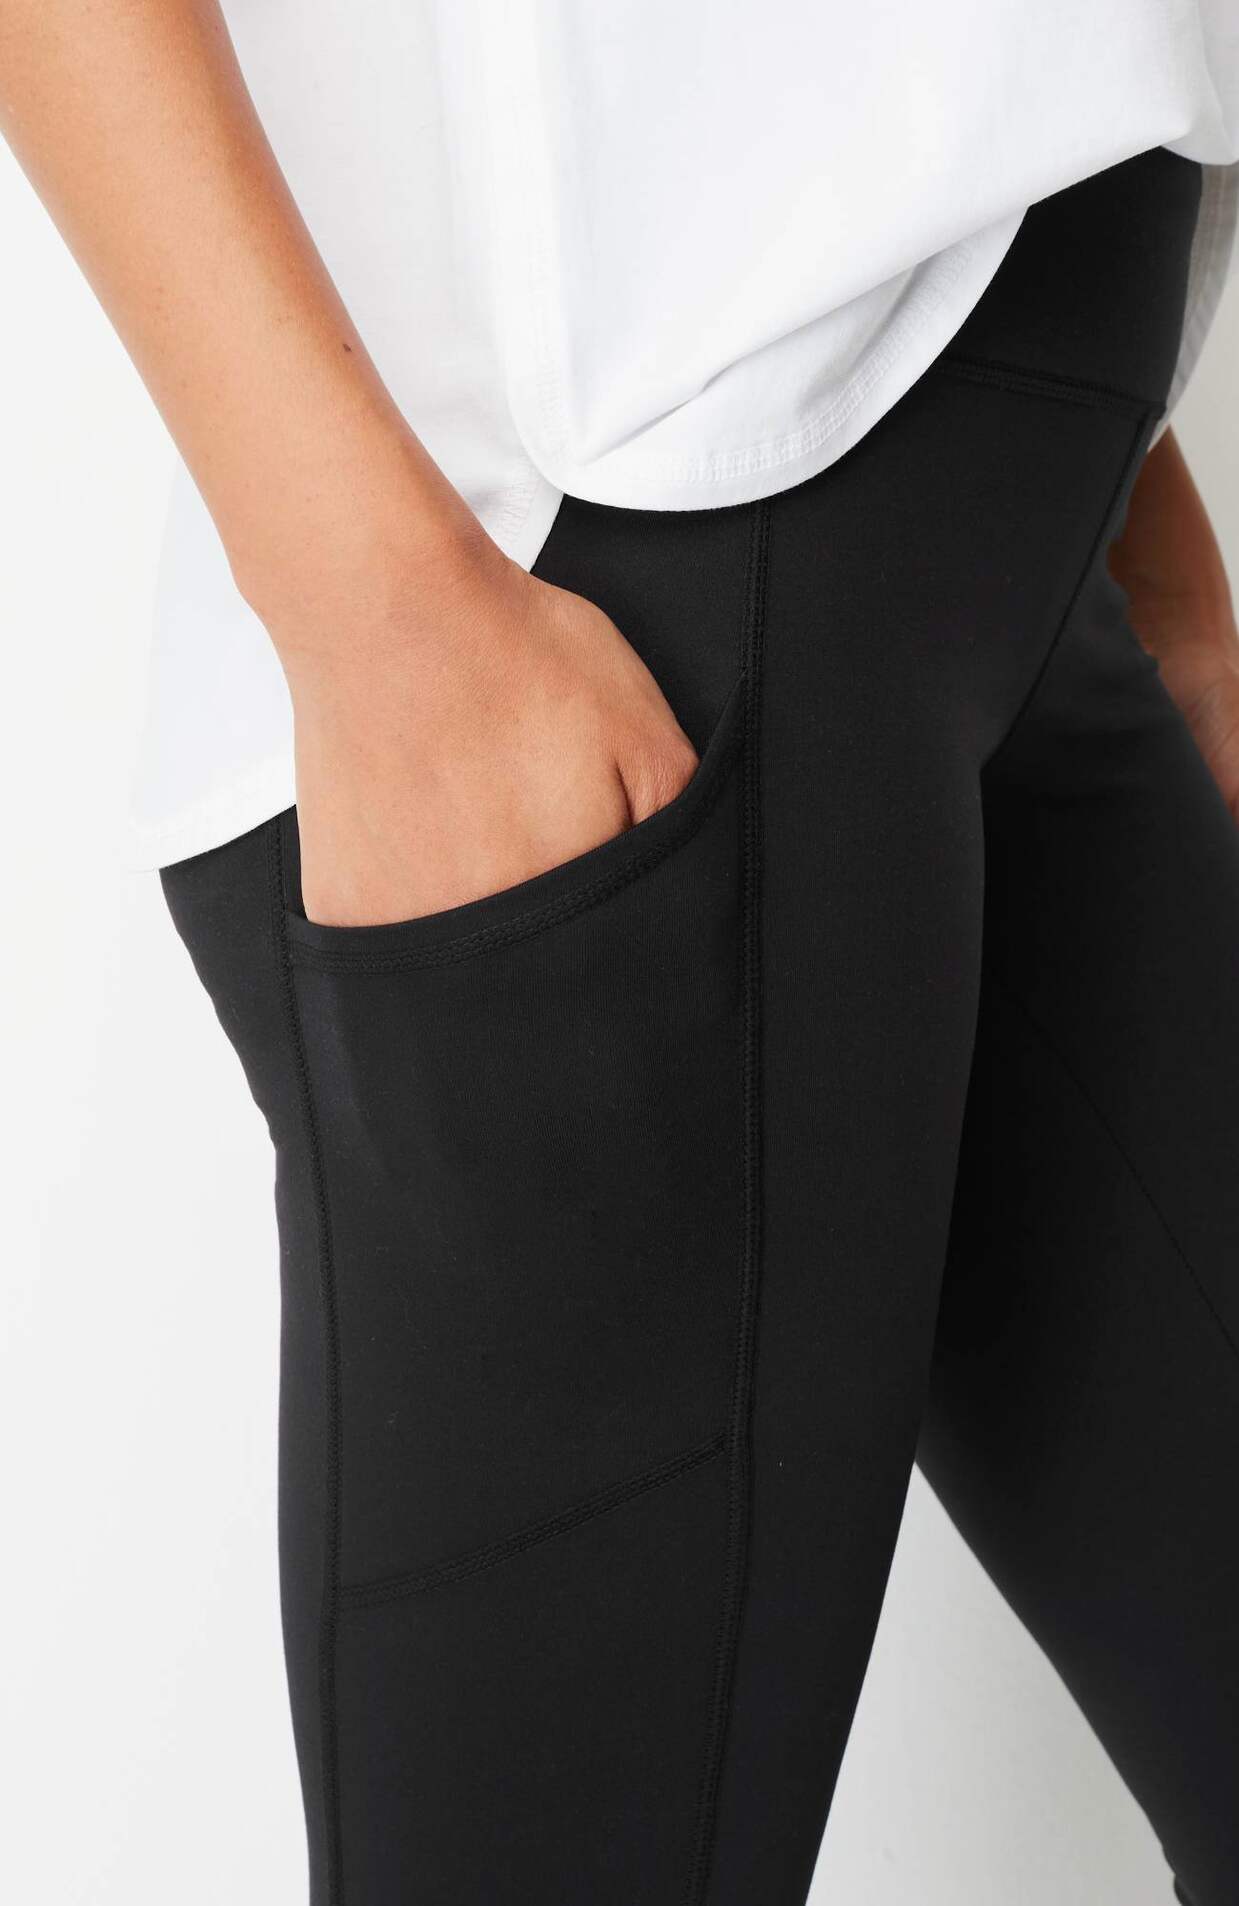 ZZAL High-Waisted Leggings Yoga Pants Ladies Texture Tight